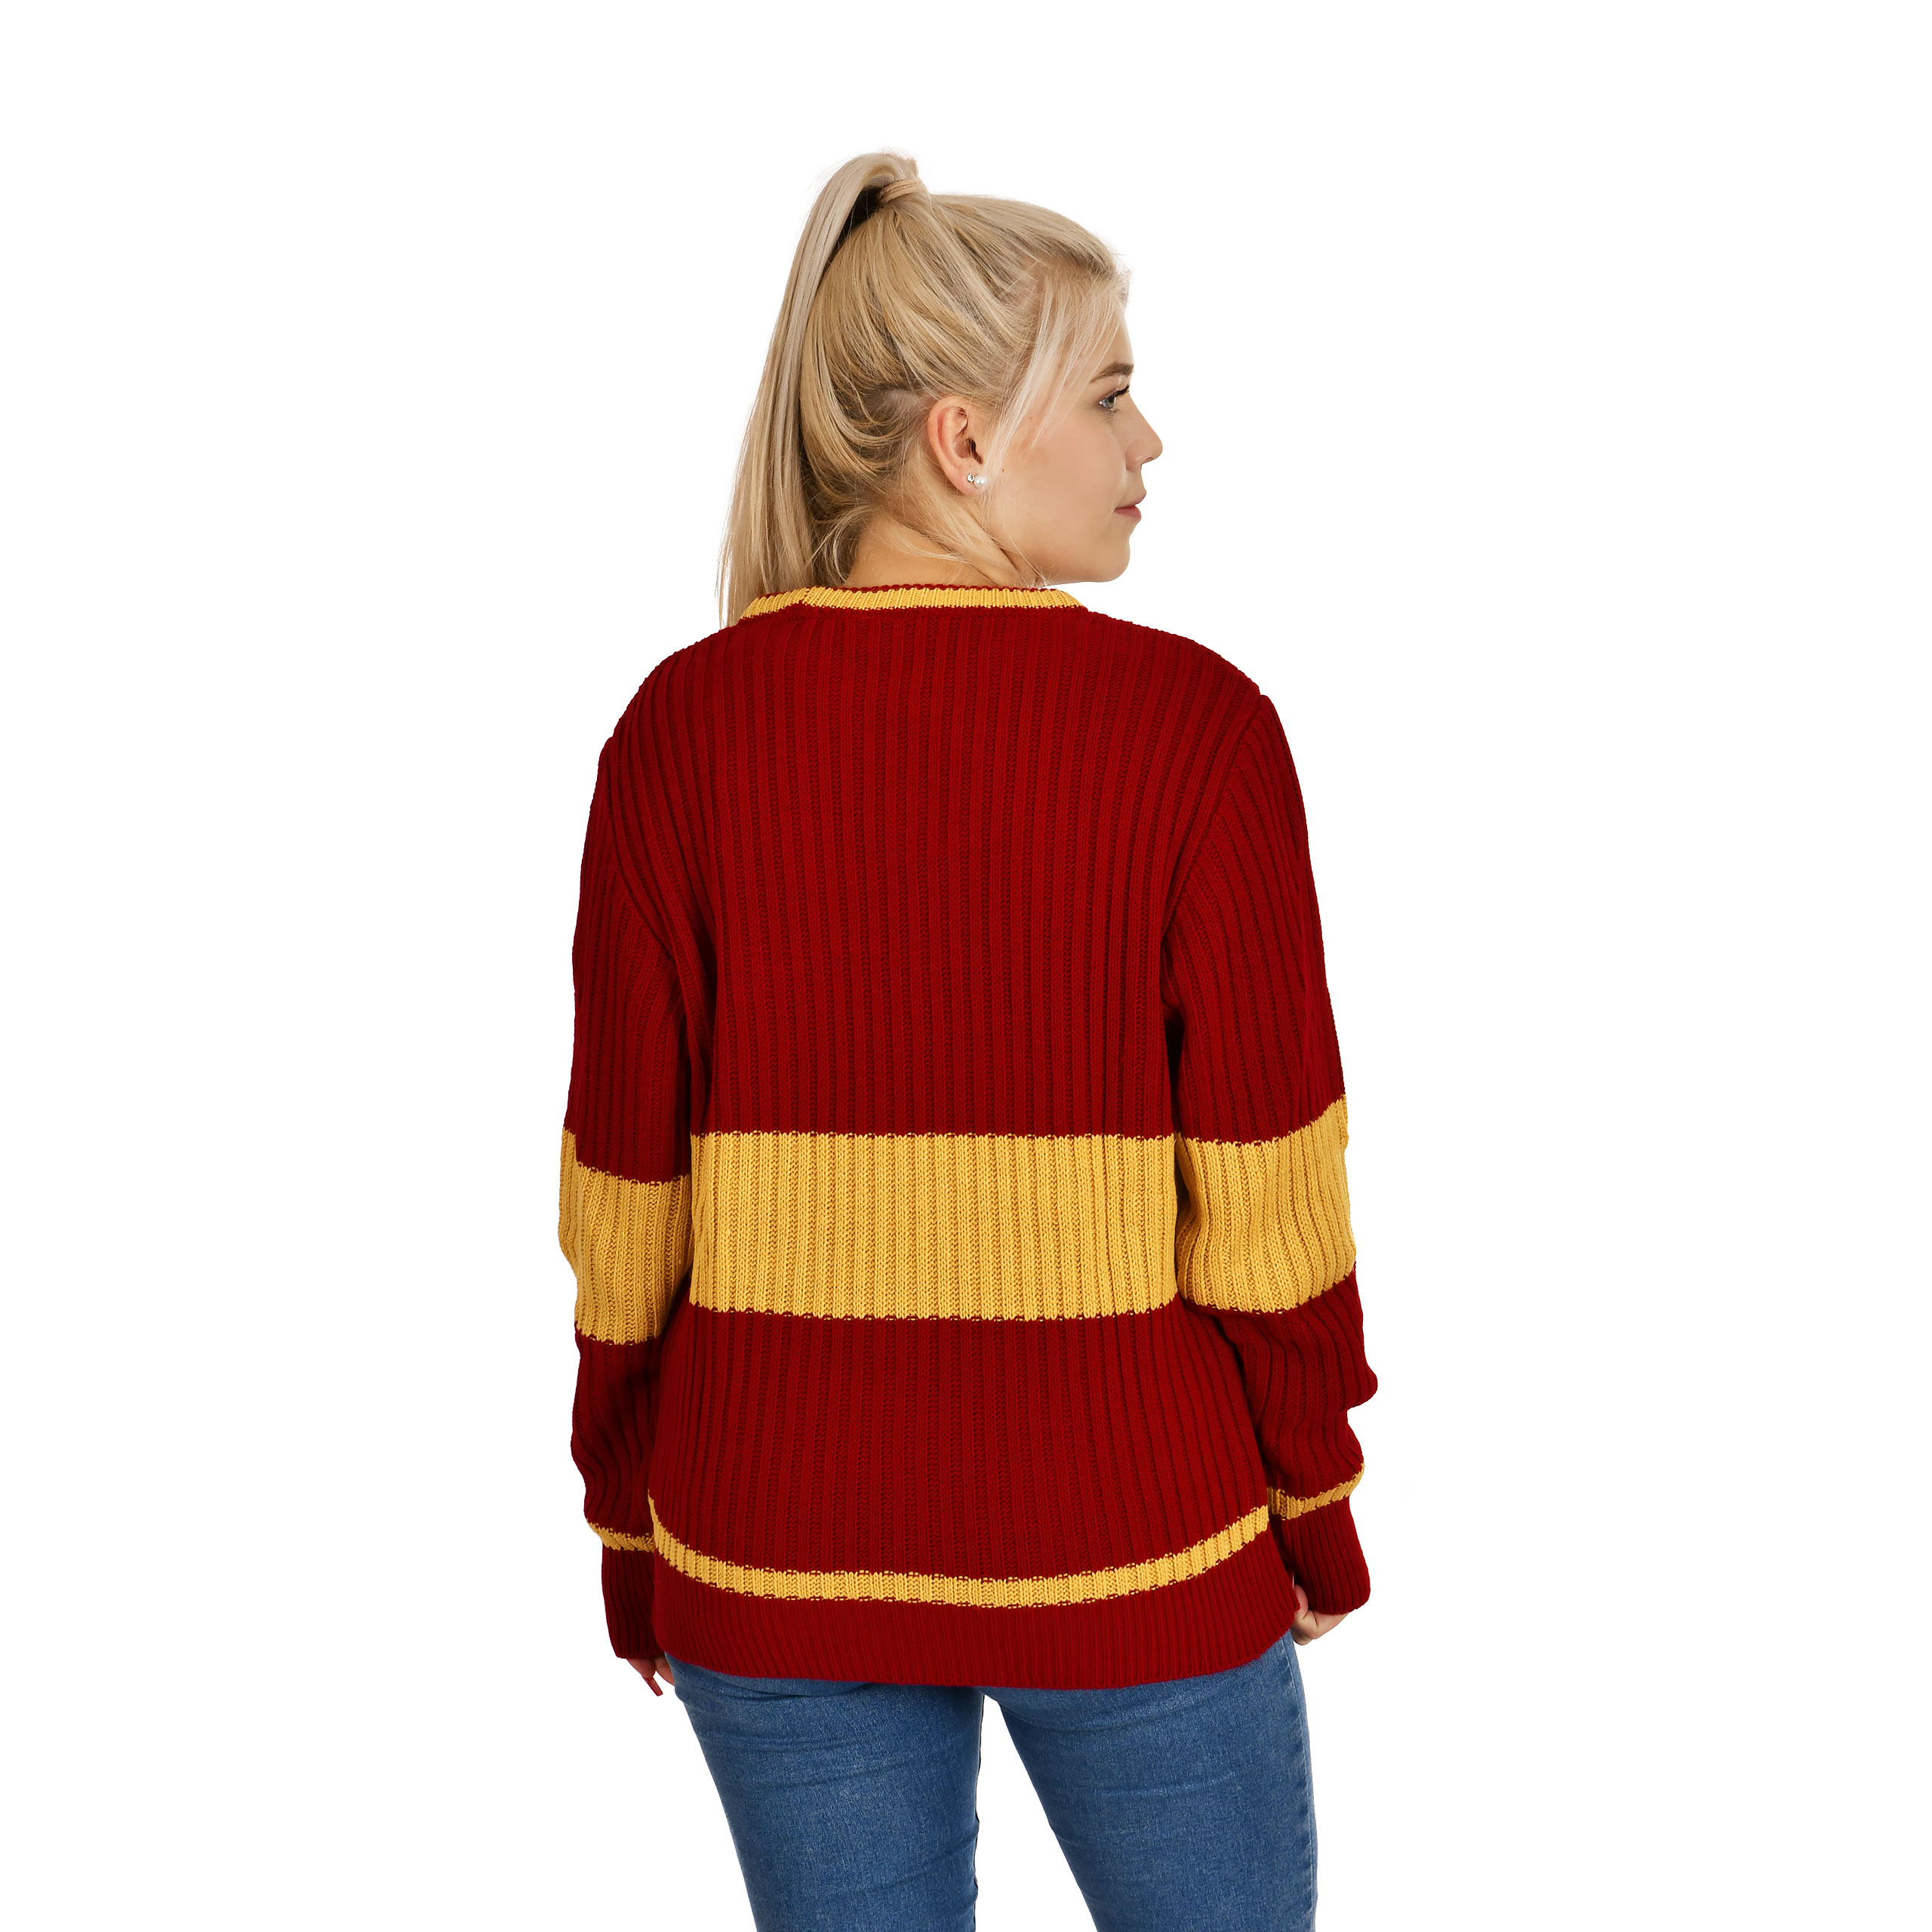 Gryffindor Knit Sweater - Harry Potter